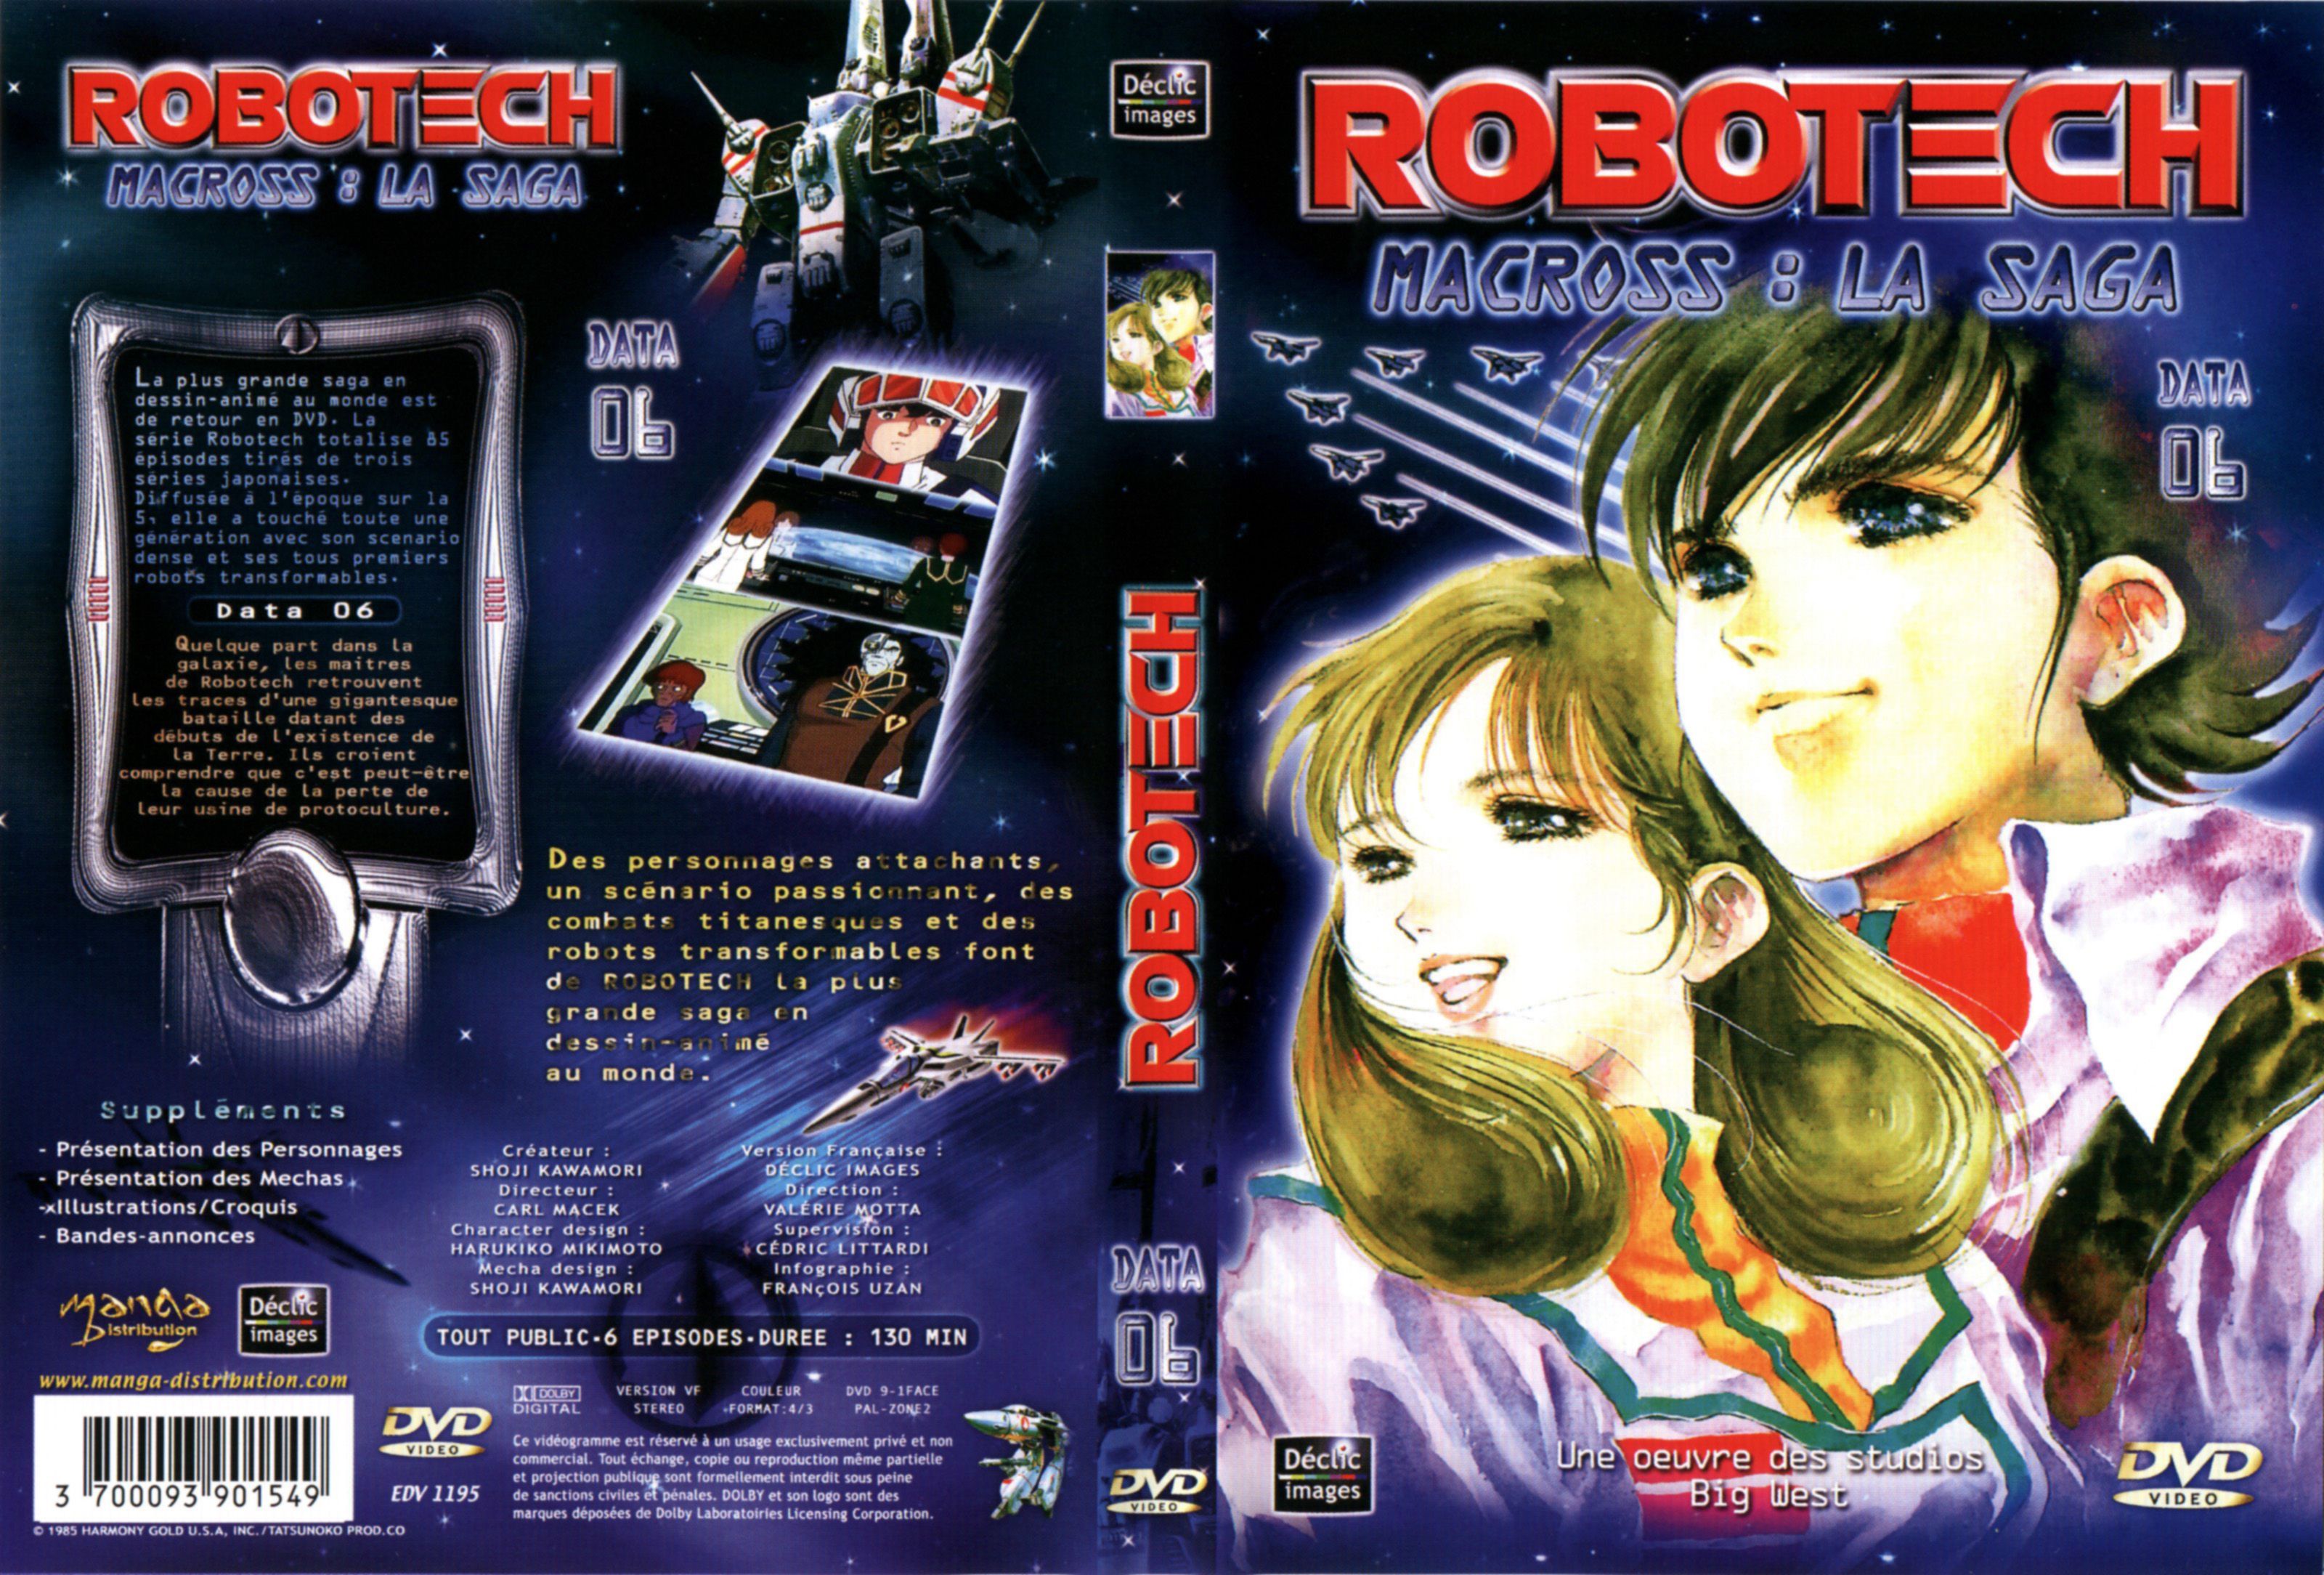 Jaquette DVD Robotech Macross la saga vol 06